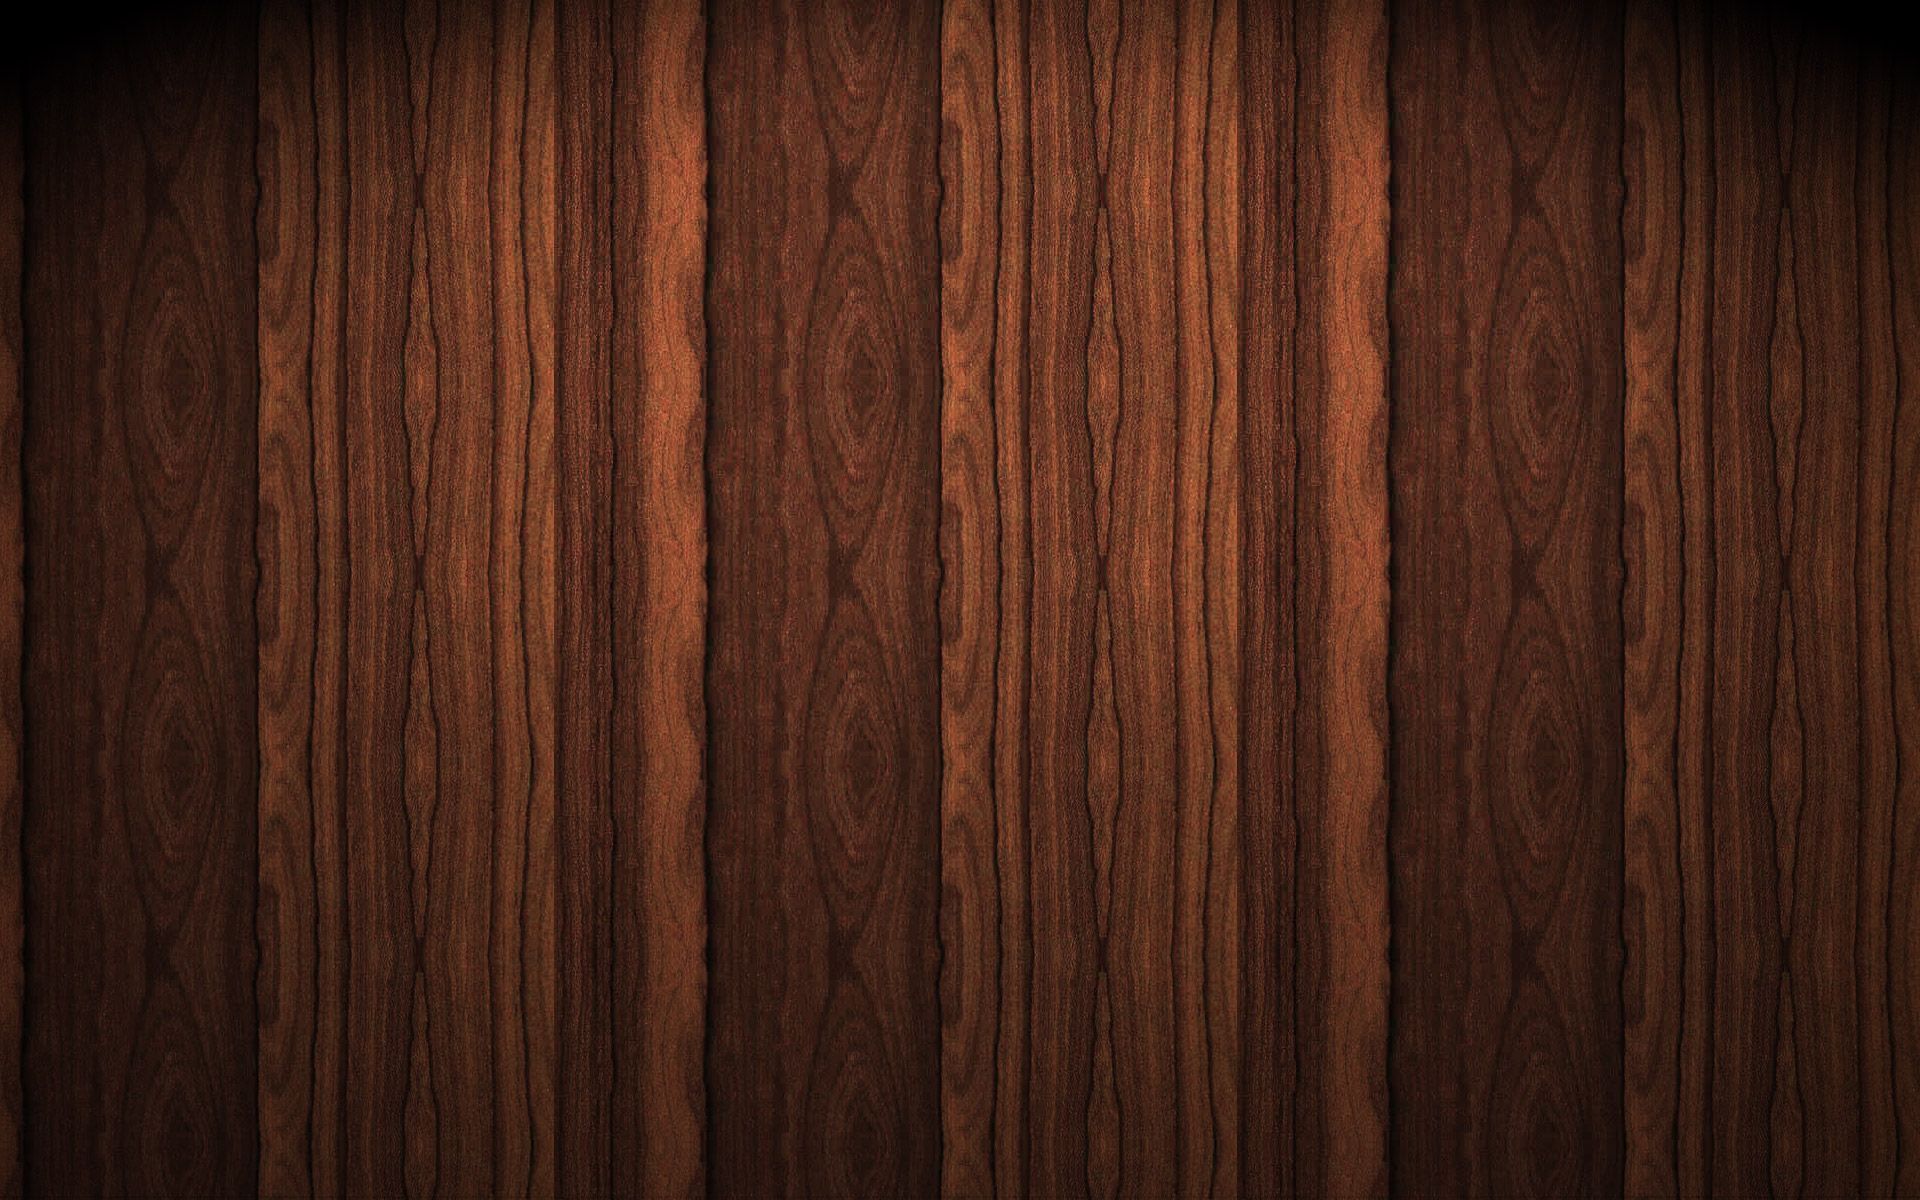 wood texture wood texture wood texture wood texture wood texture